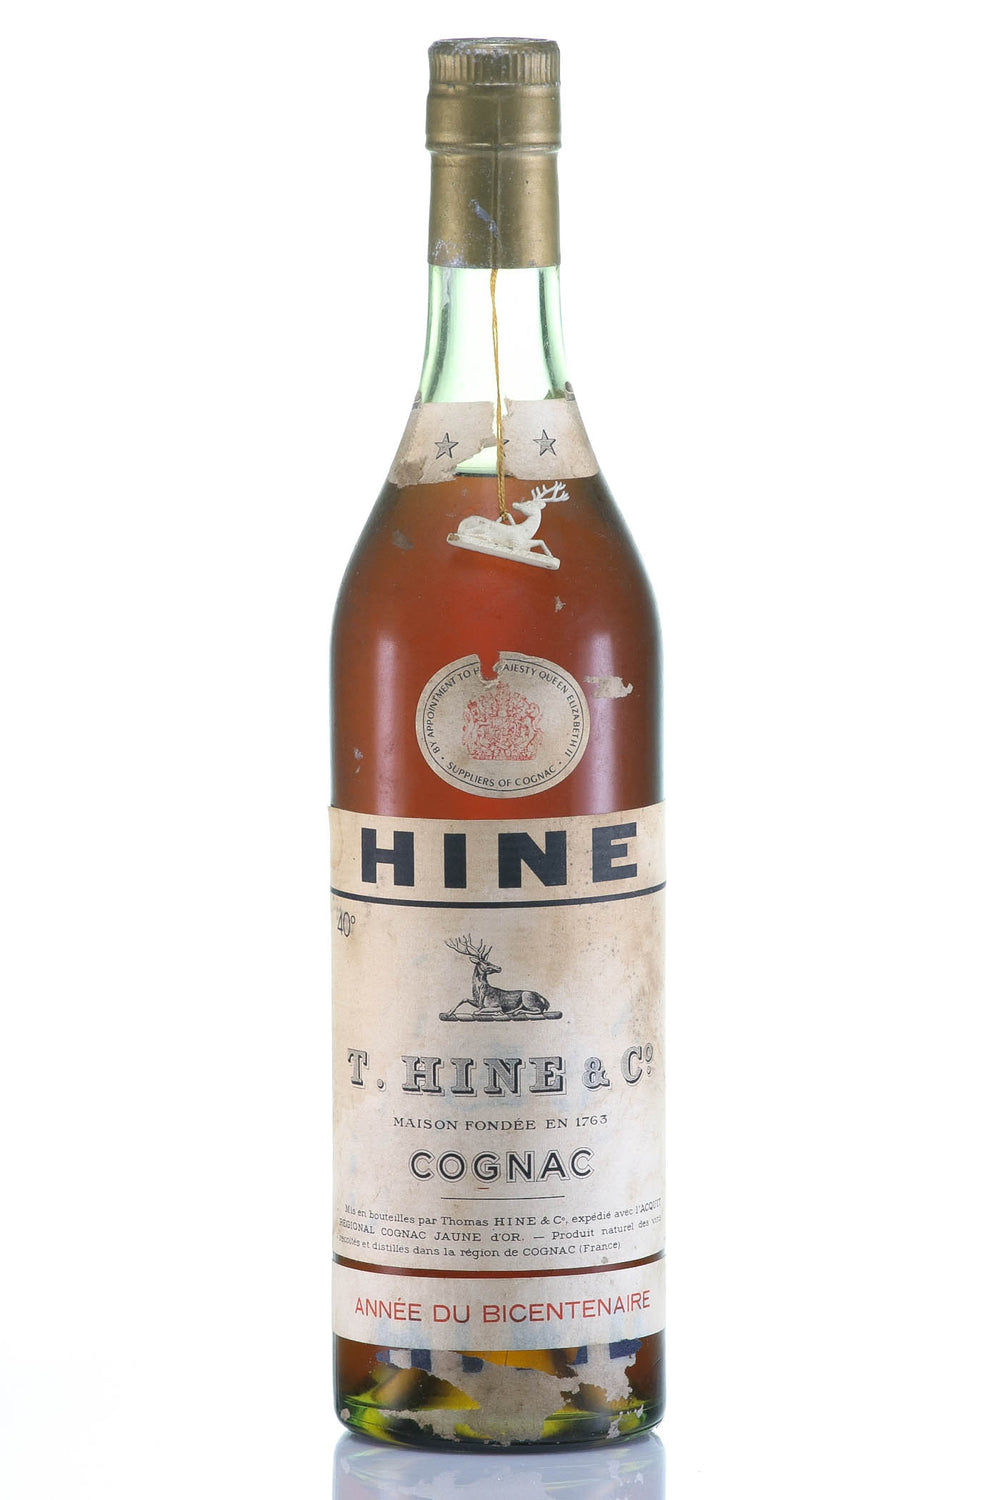 Hine Three Star Cognac, Jarnac, France (Bicentennial Edition) - Rue Pinard